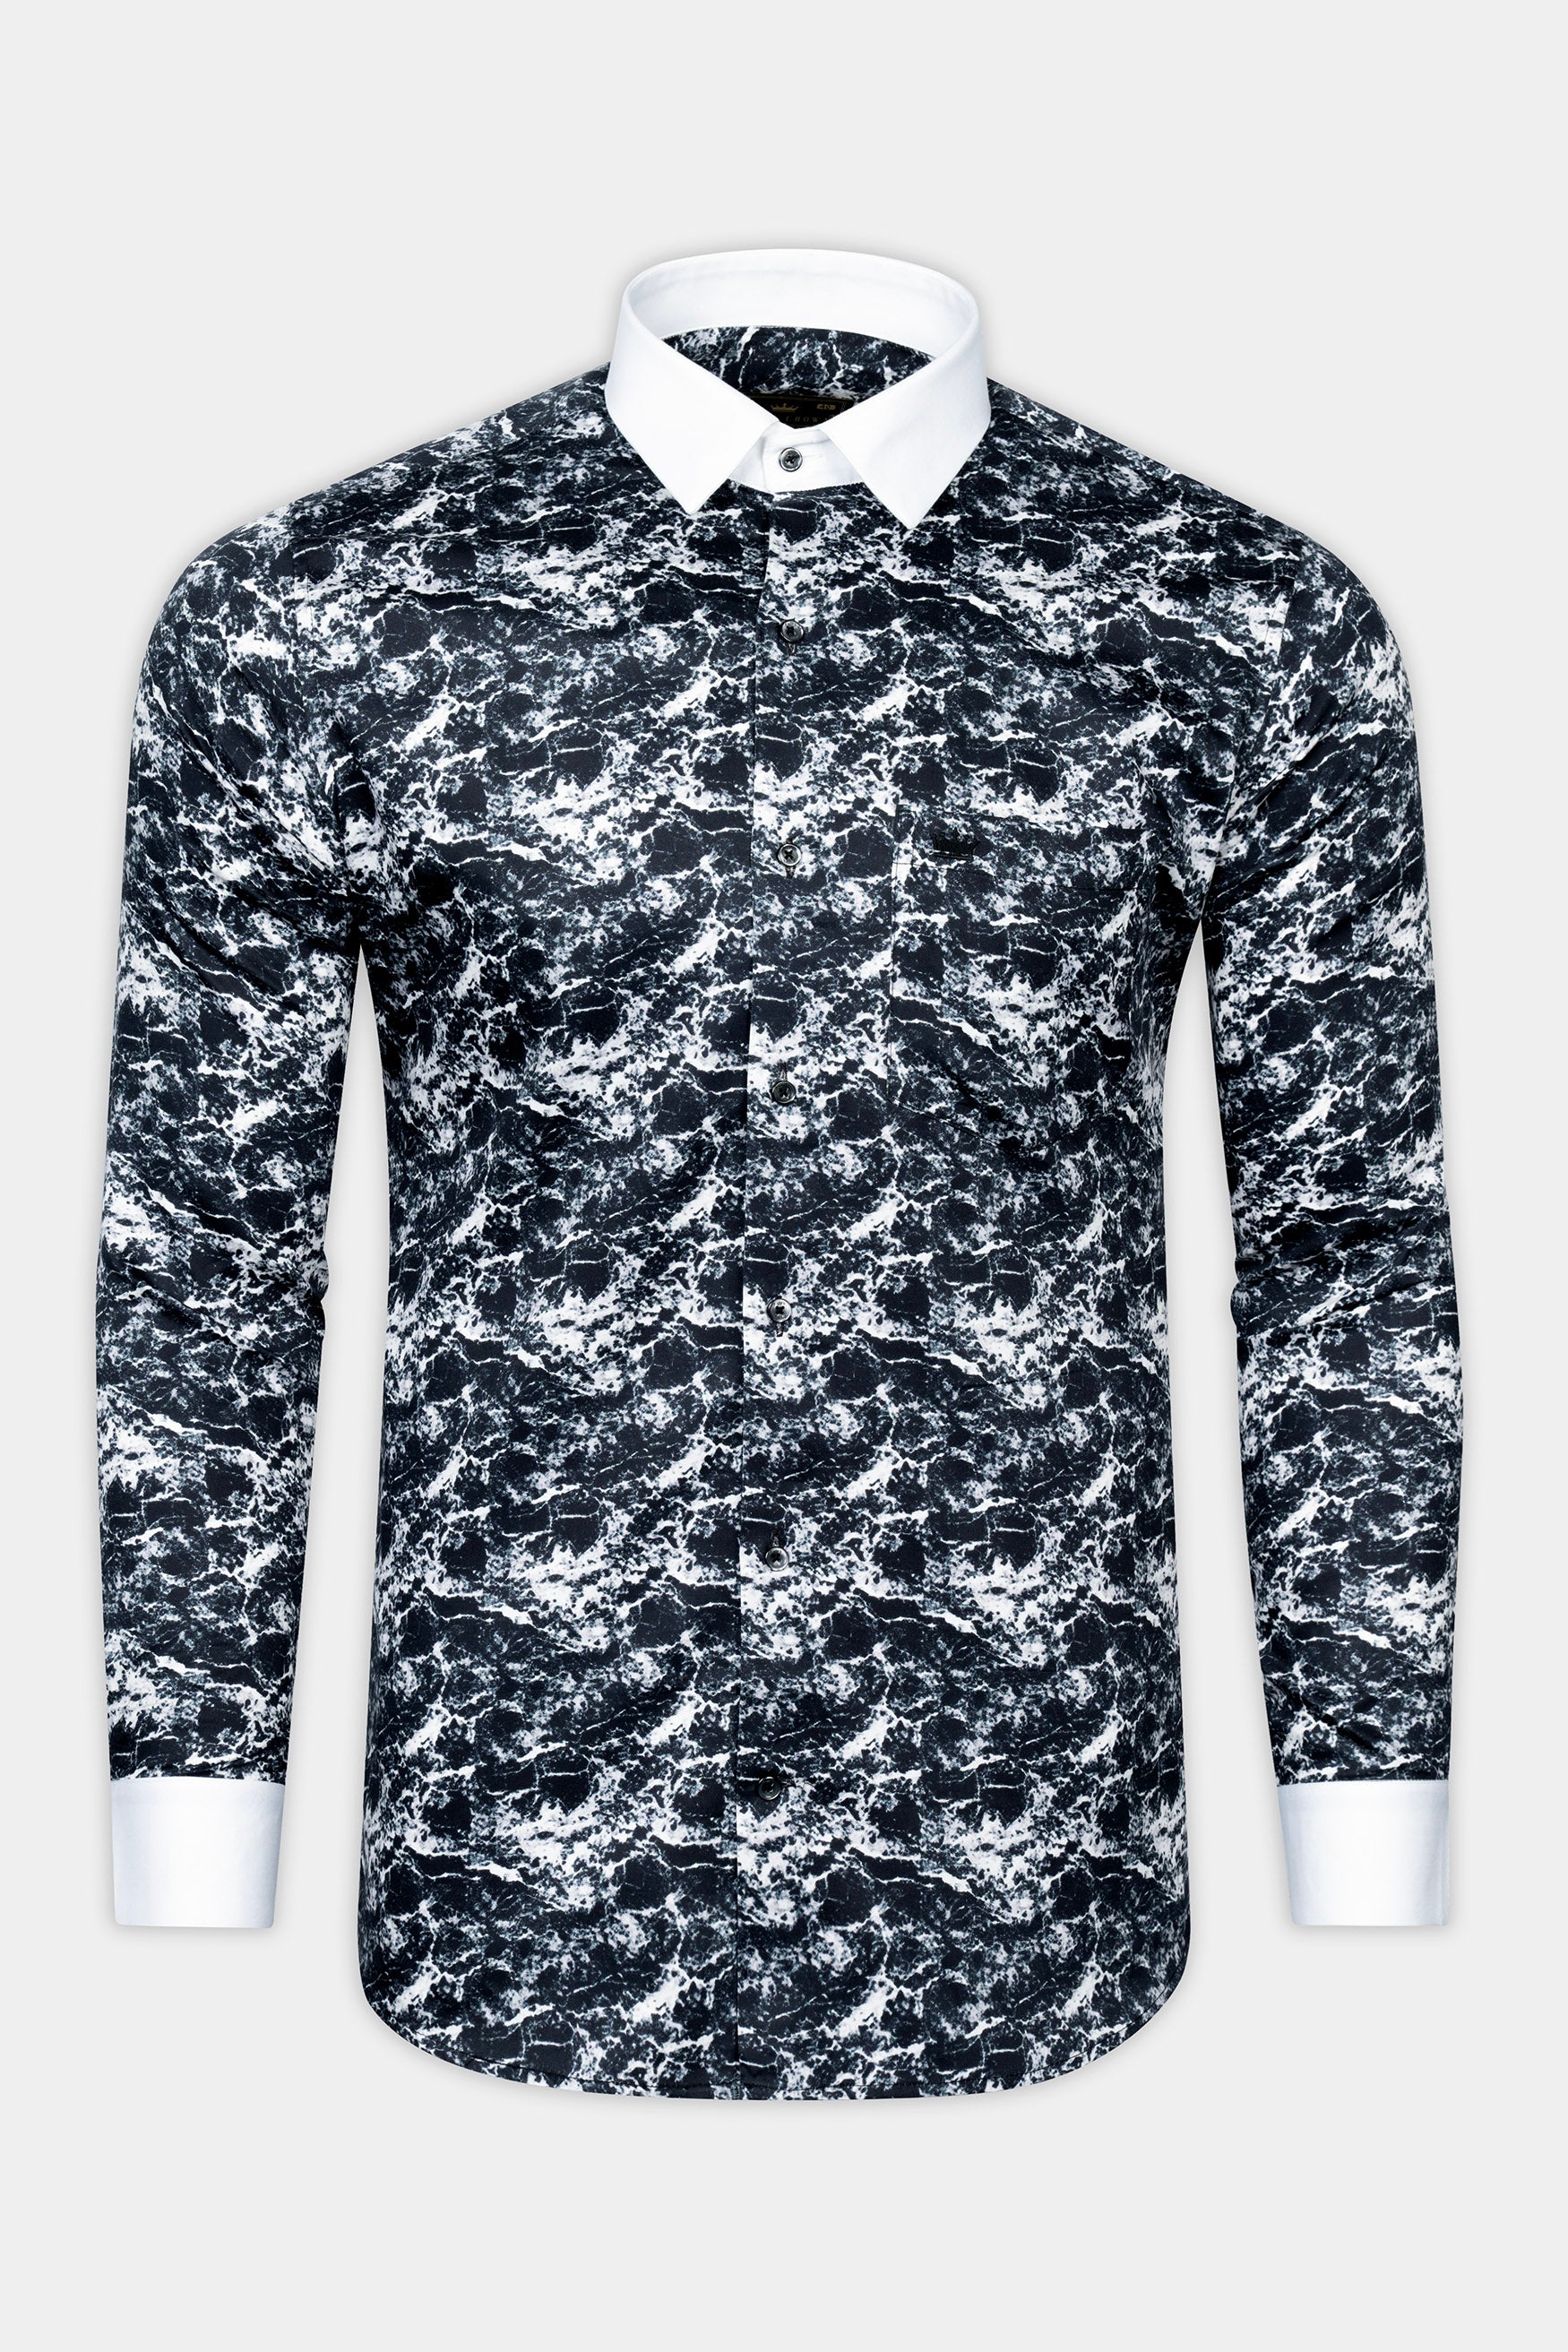 Shark blue and white Marble Printed Subtle Sheen Super Soft Premium Cotton Shirt